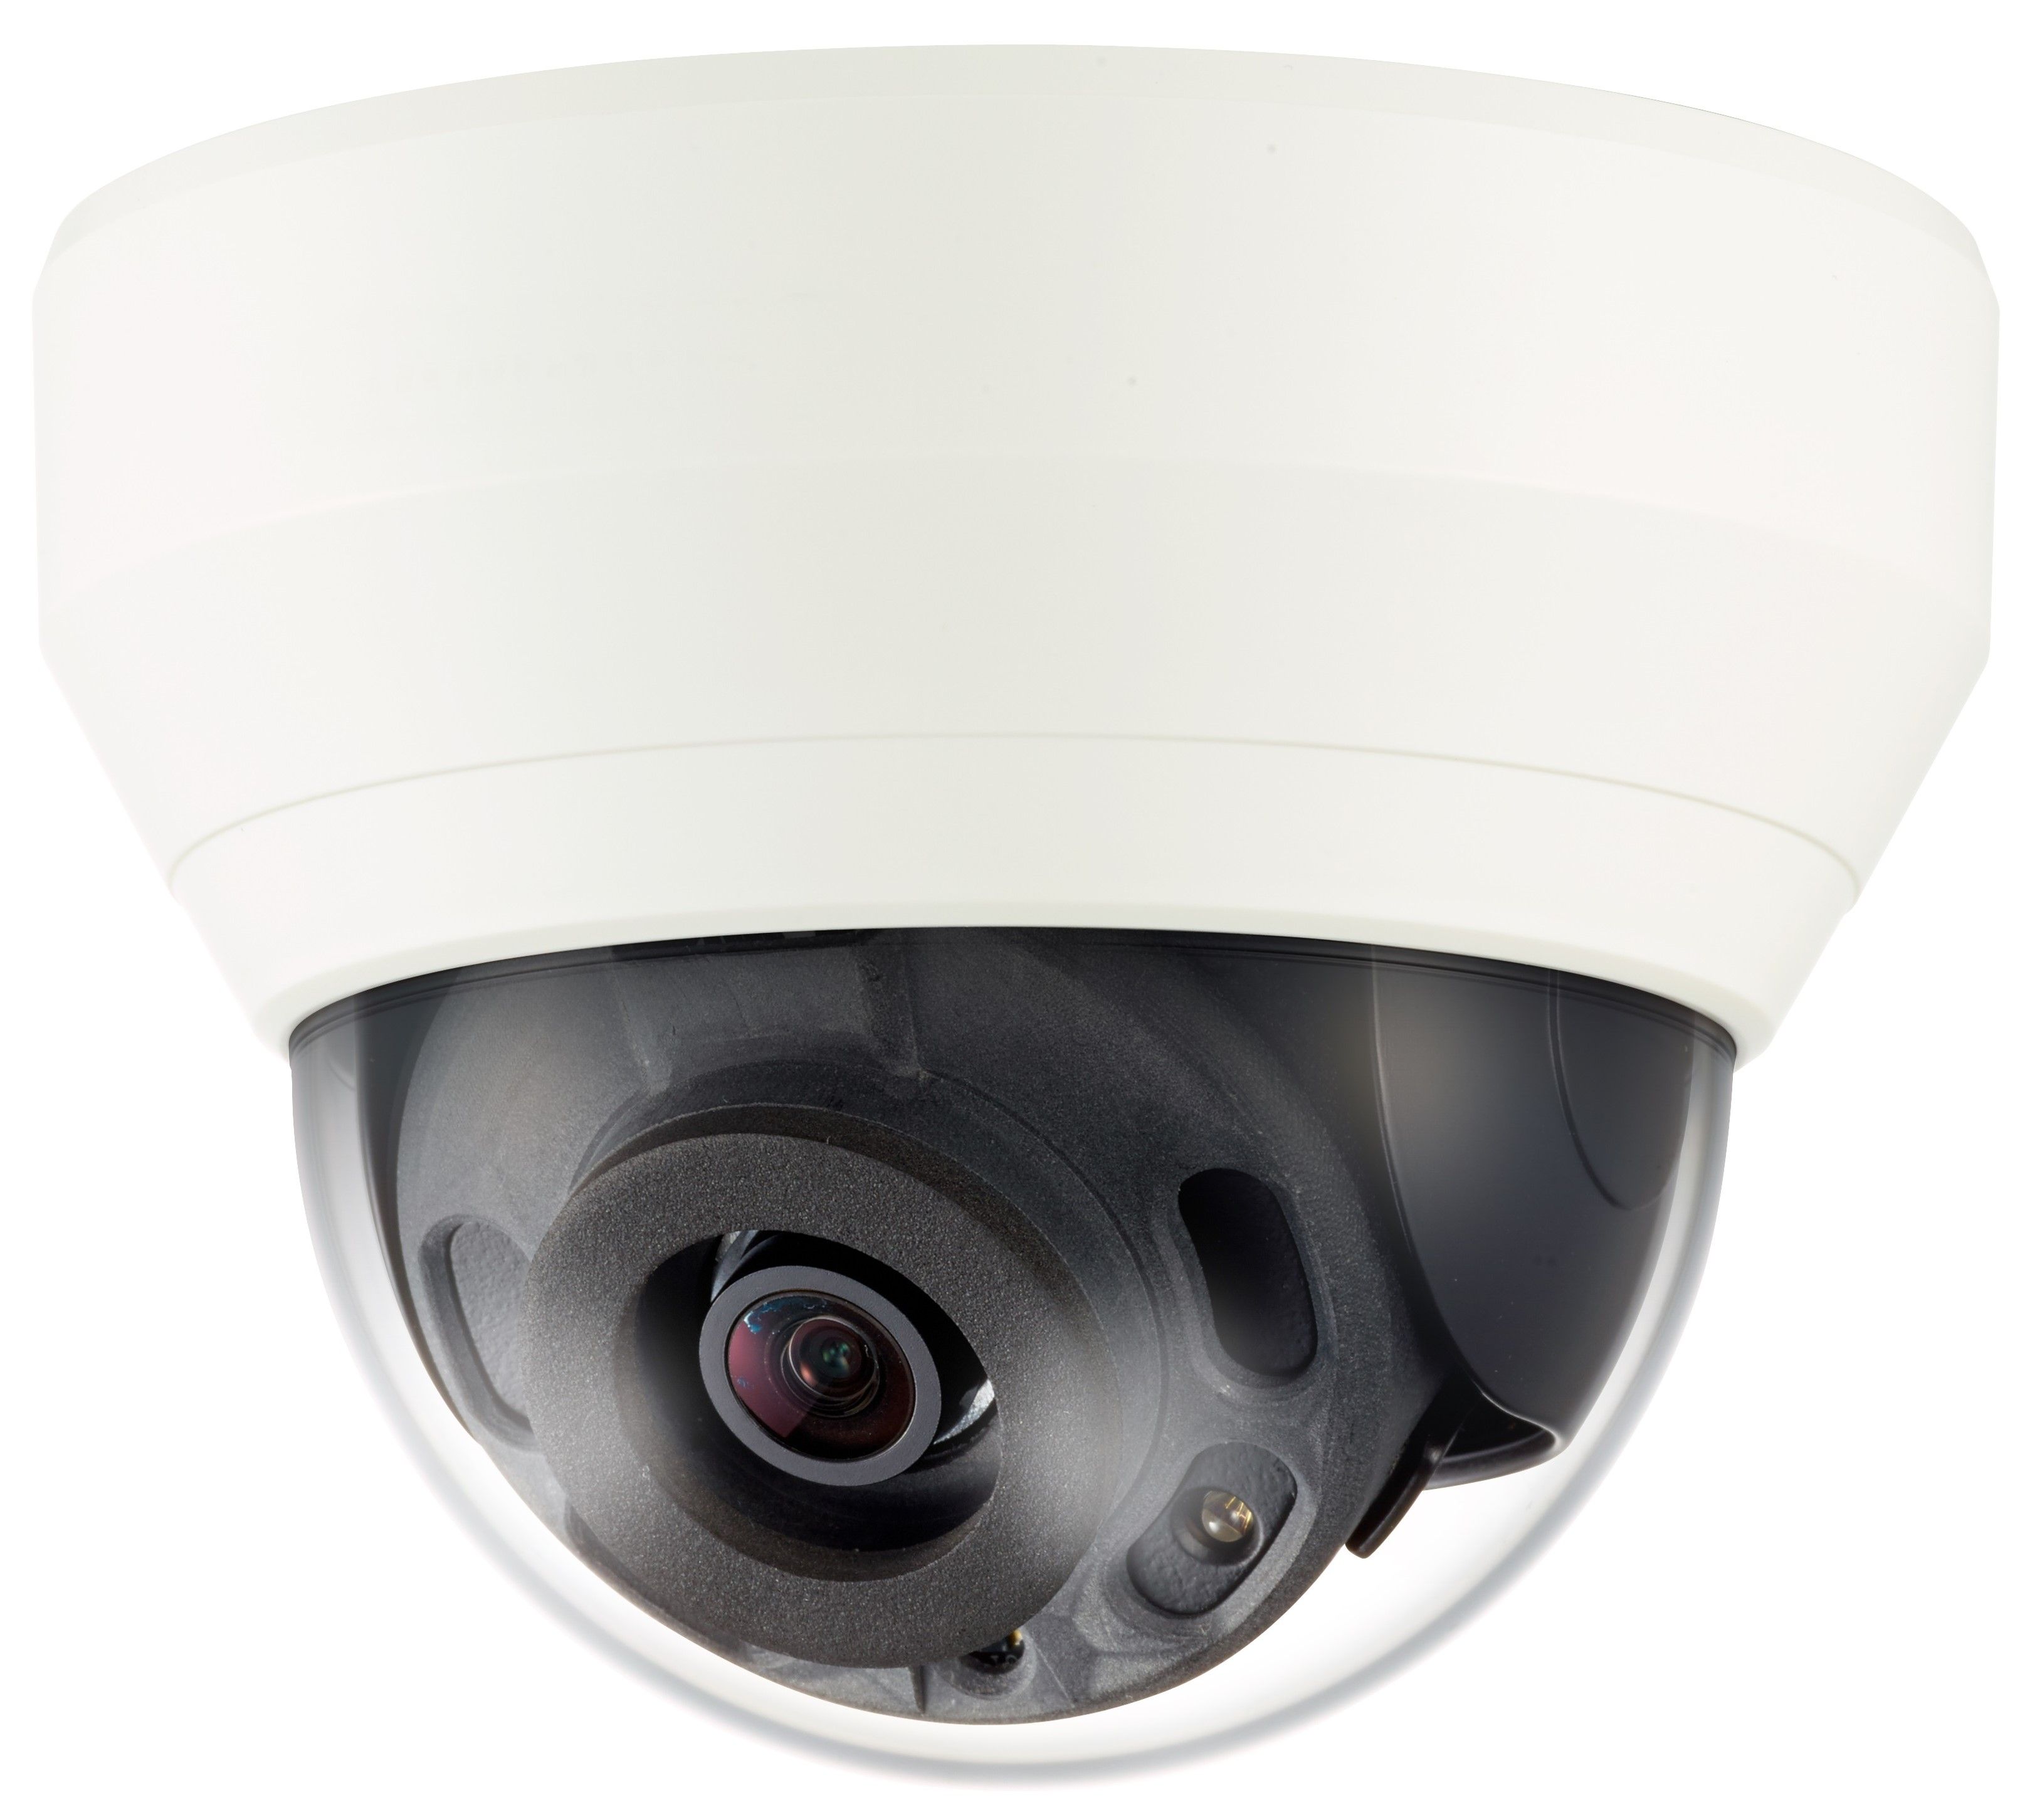 Камера видеонаблюдения Wisenet QND-7020R цена 9225.94 грн - фотография 2